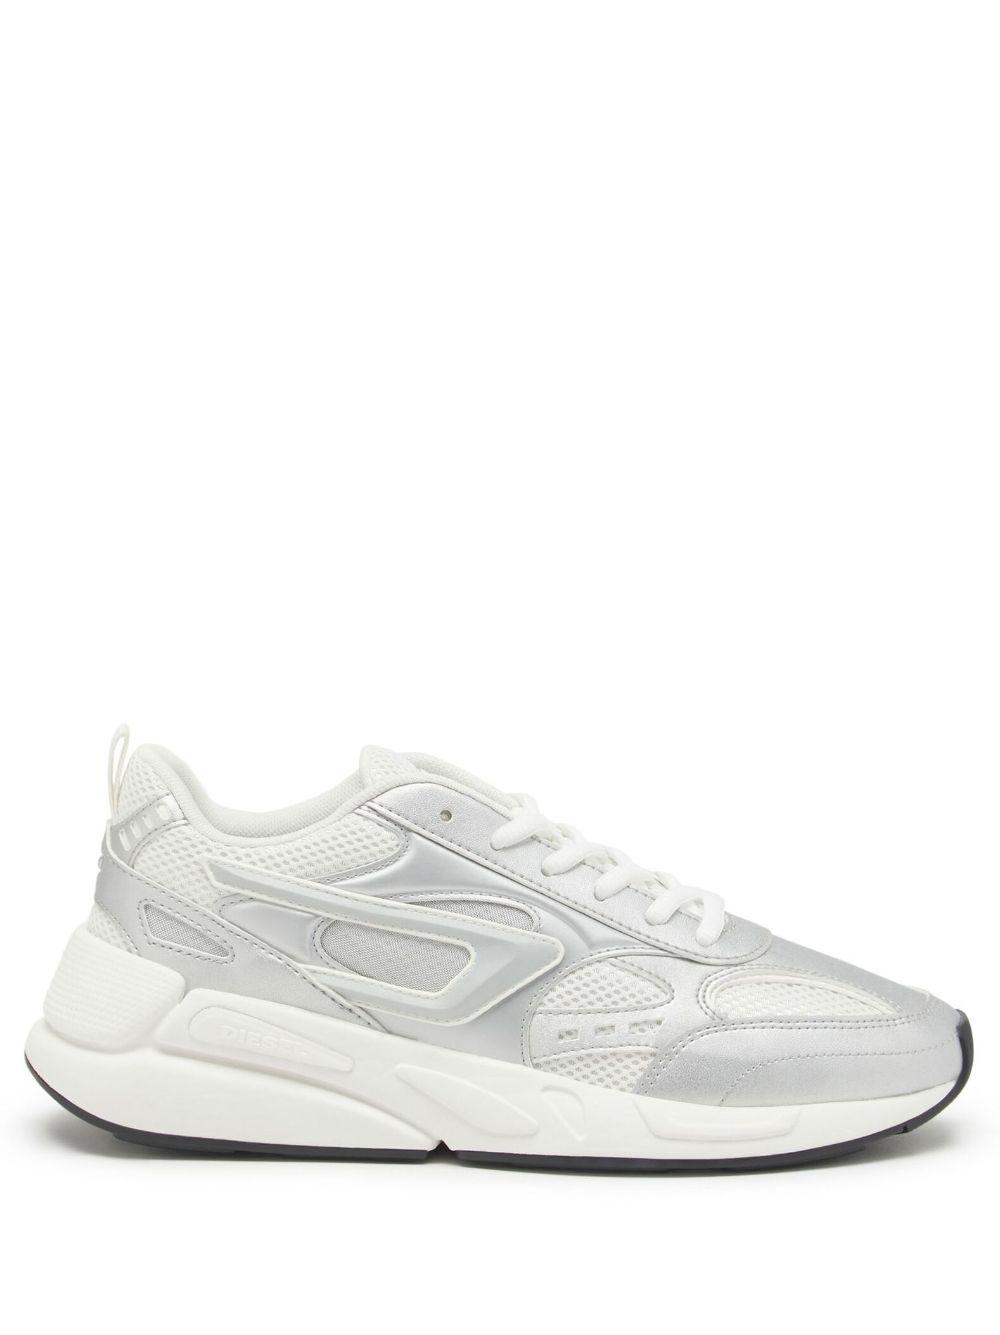 DIESEL S-serendipity Pro-x1 Sneakers in White | Lyst